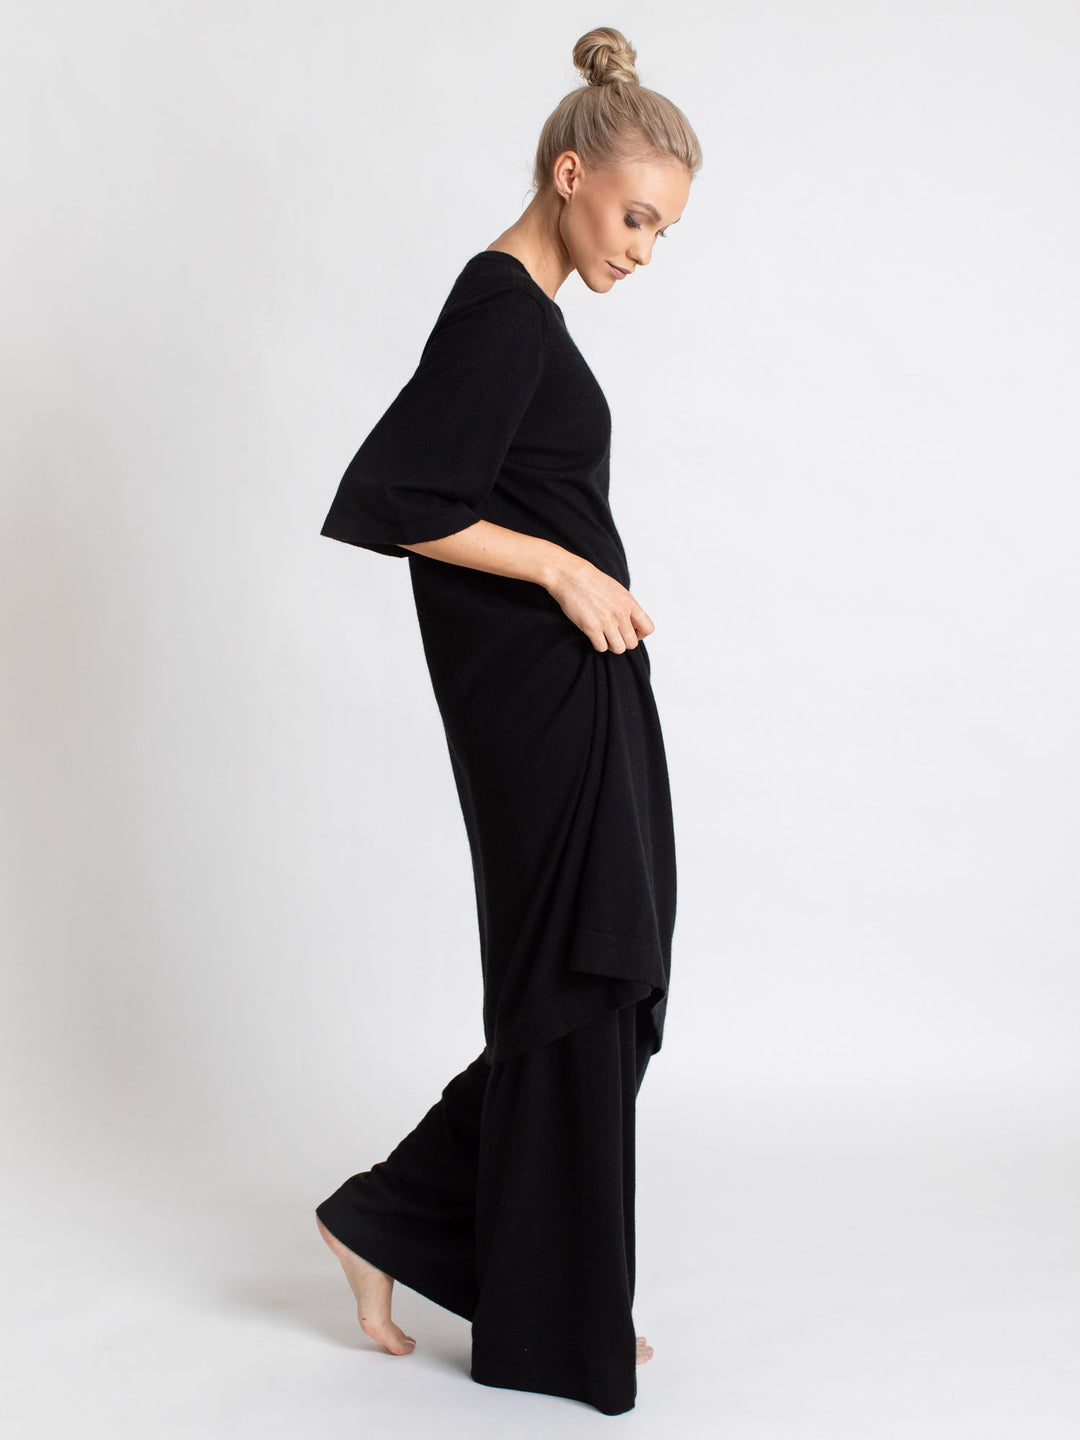 Cashmere "Tunic" in 100% pure cashmere. Color: black. Scandinavian design by Kashmina.